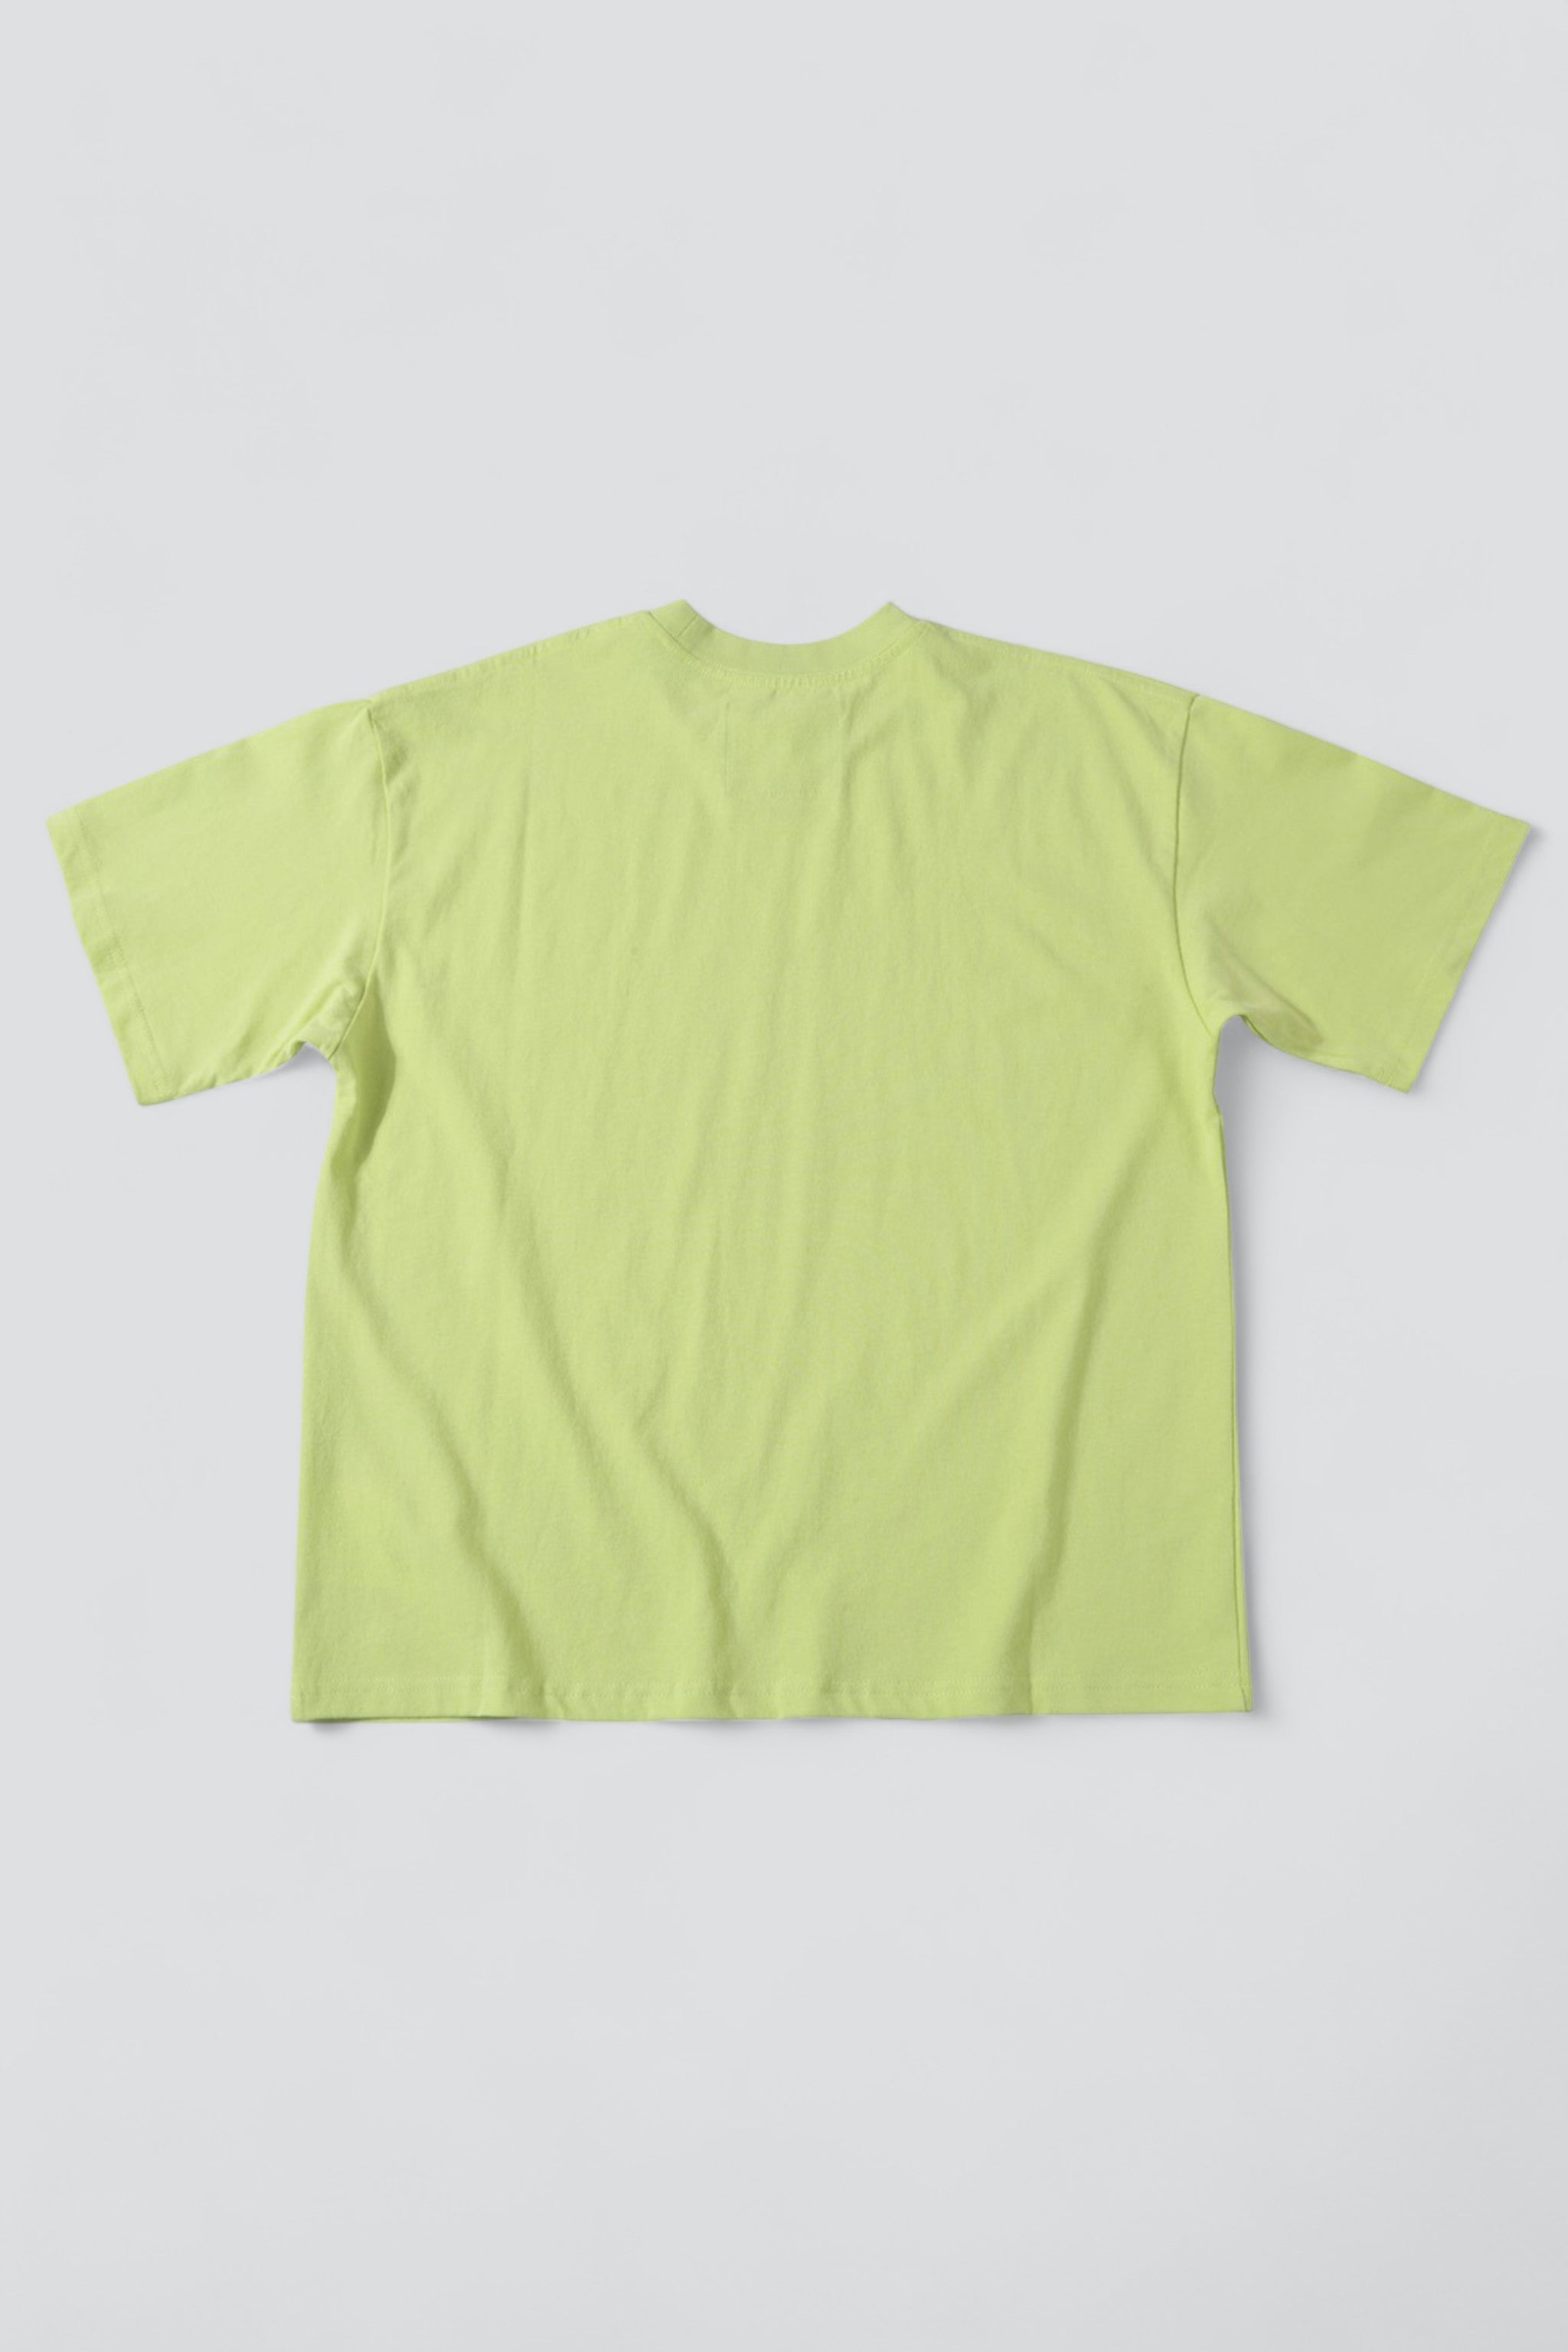 Chartreuse Euphoric T-Shirt